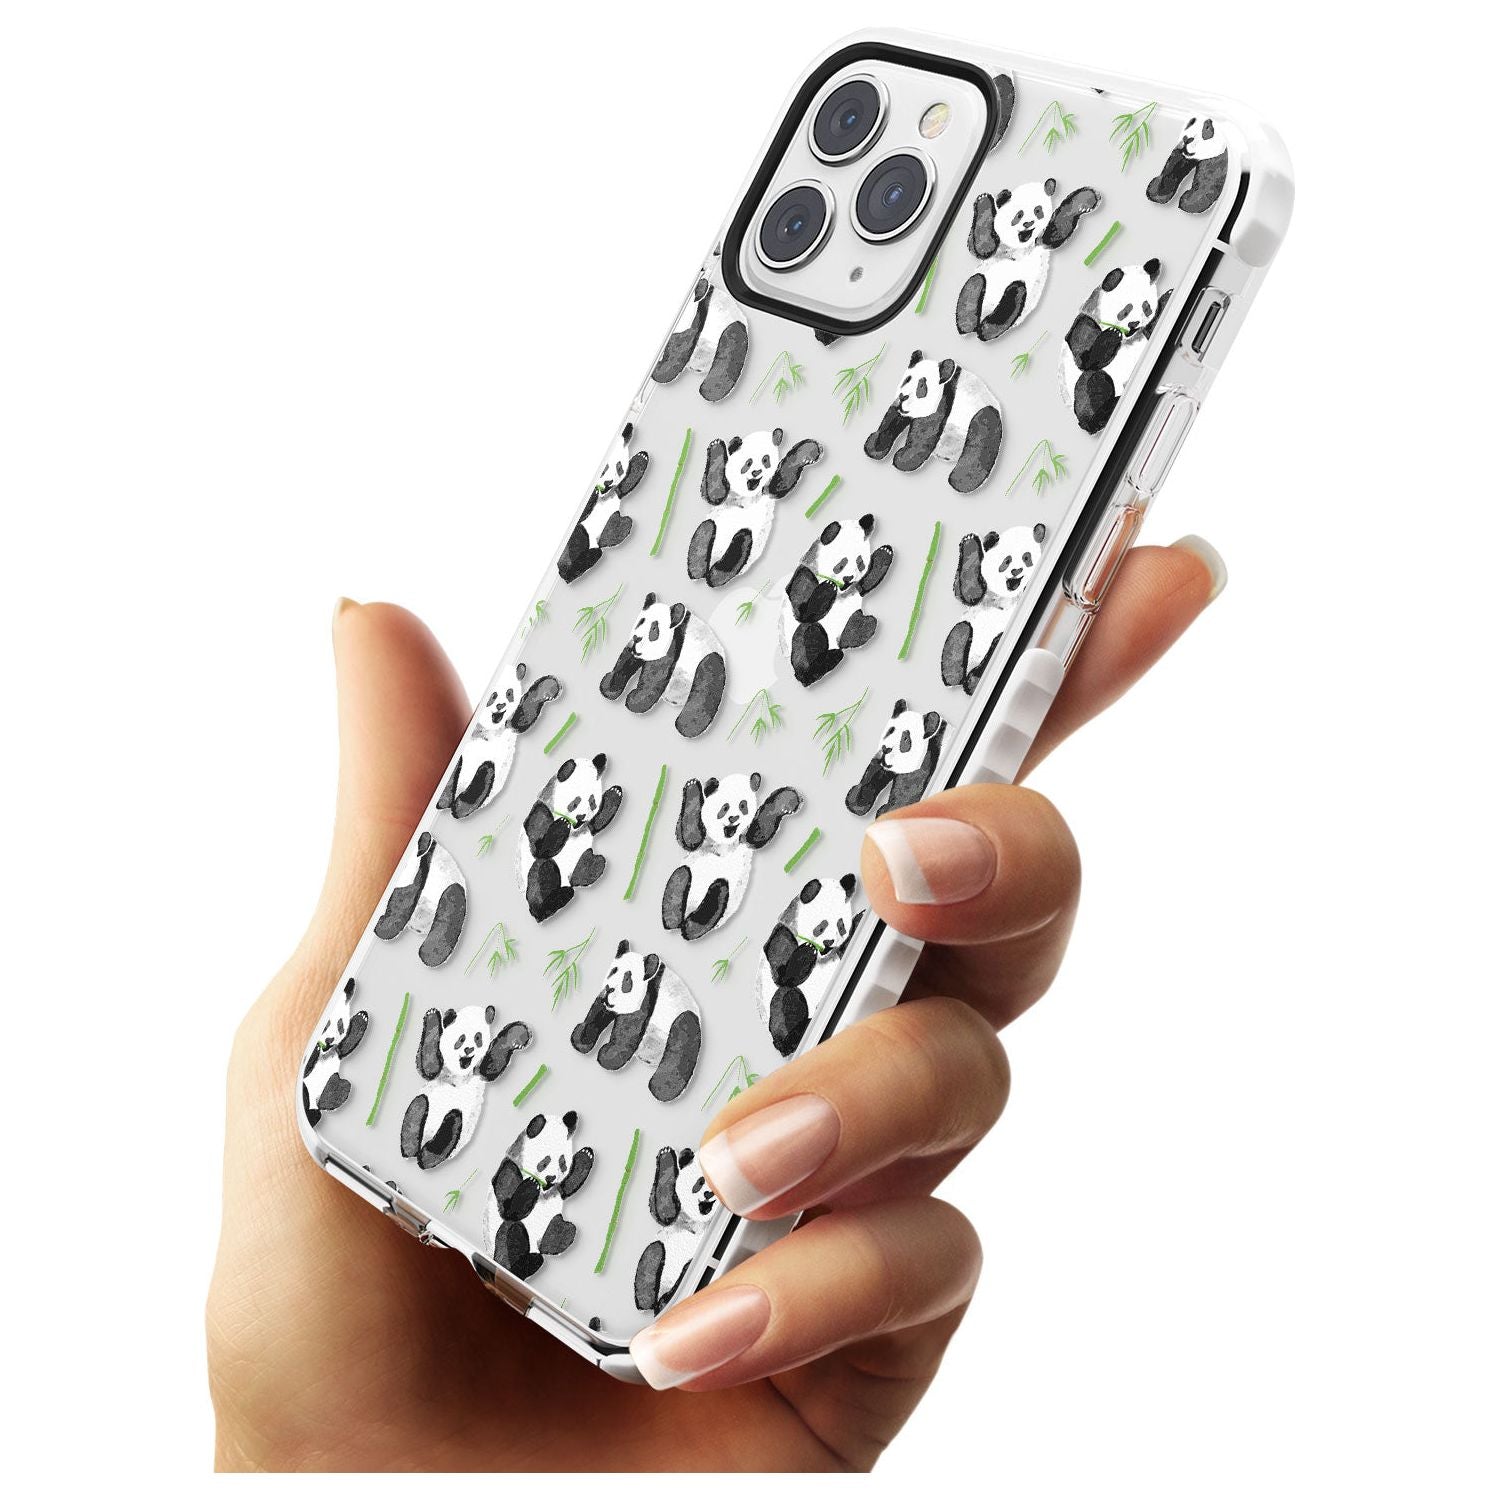 Watercolour Panda Pattern Slim TPU Phone Case for iPhone 11 Pro Max